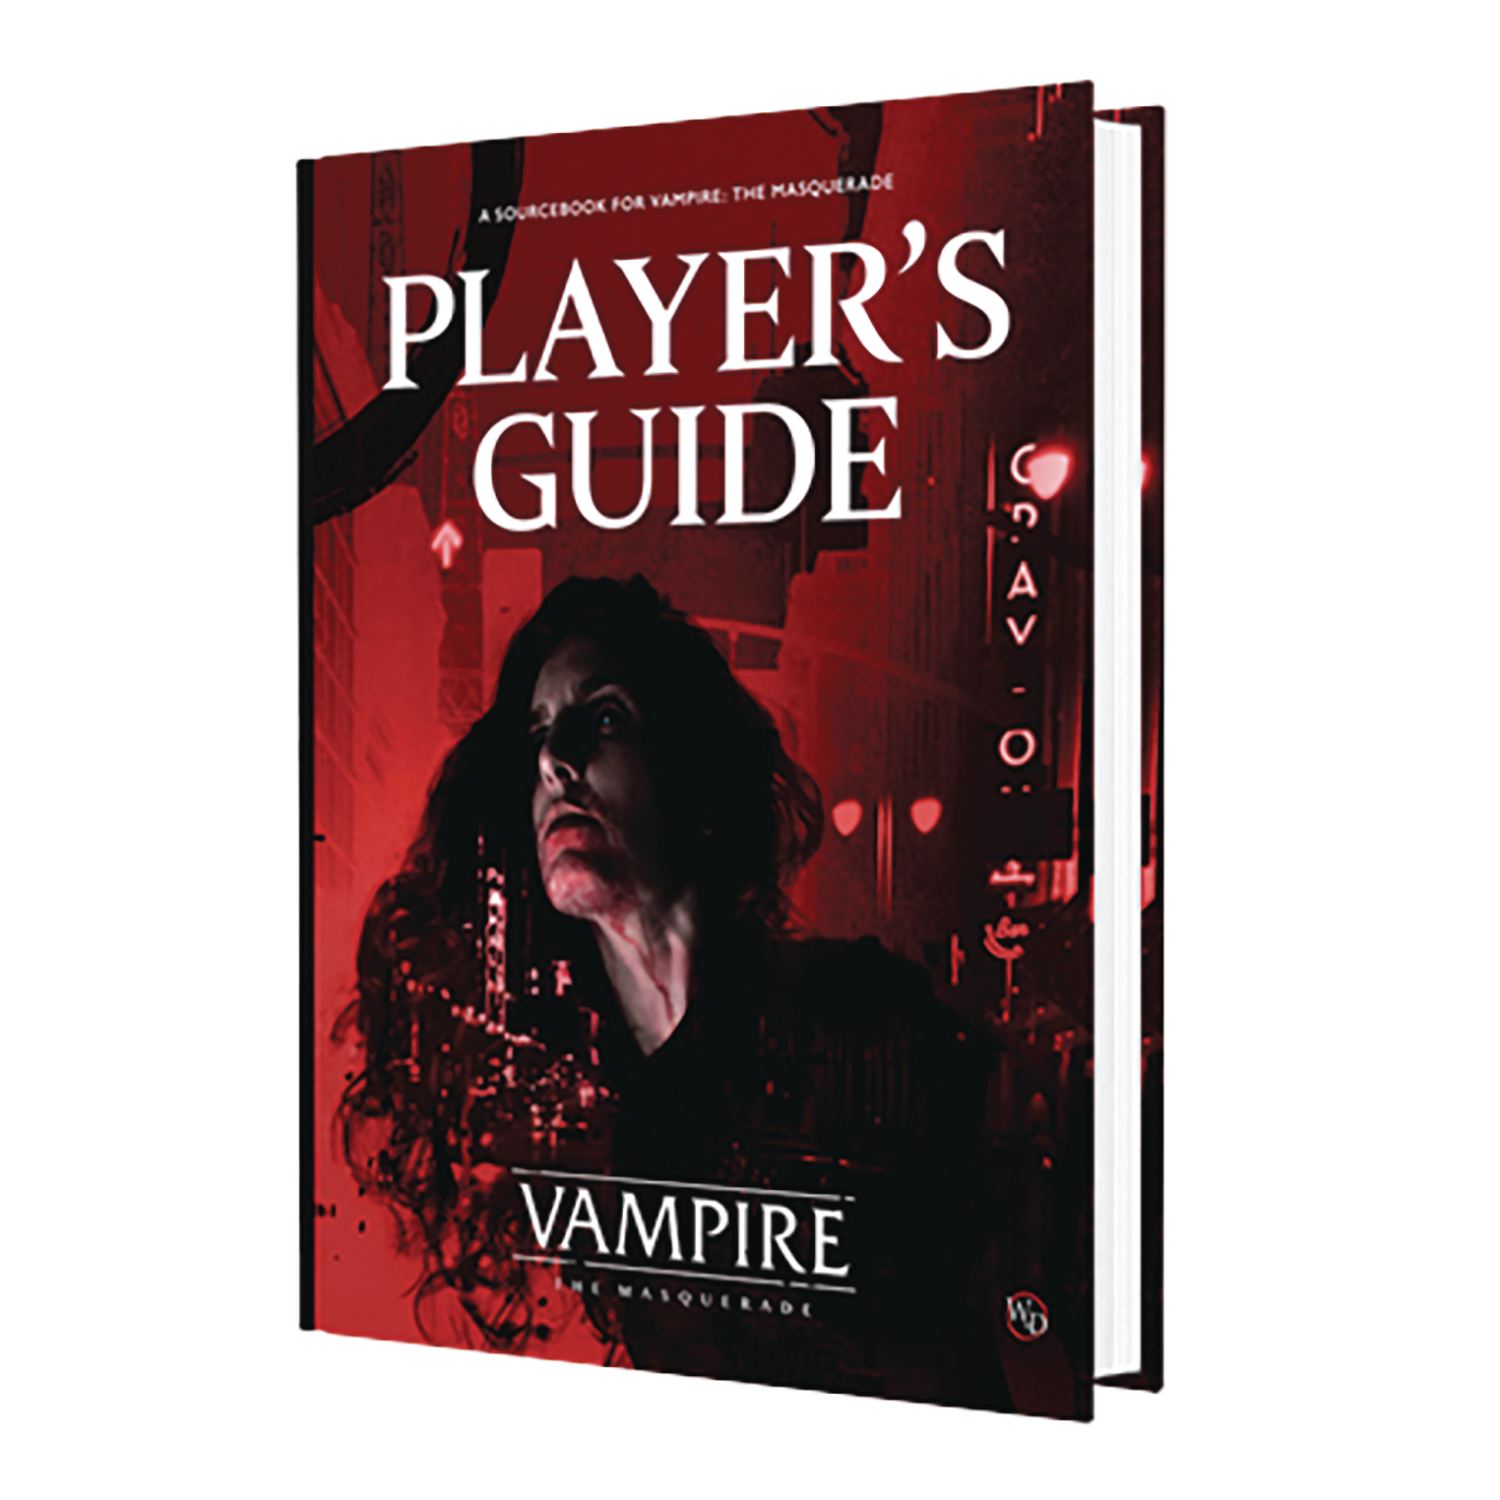 Vampire Masquerade RPG Players Guide Hardcover